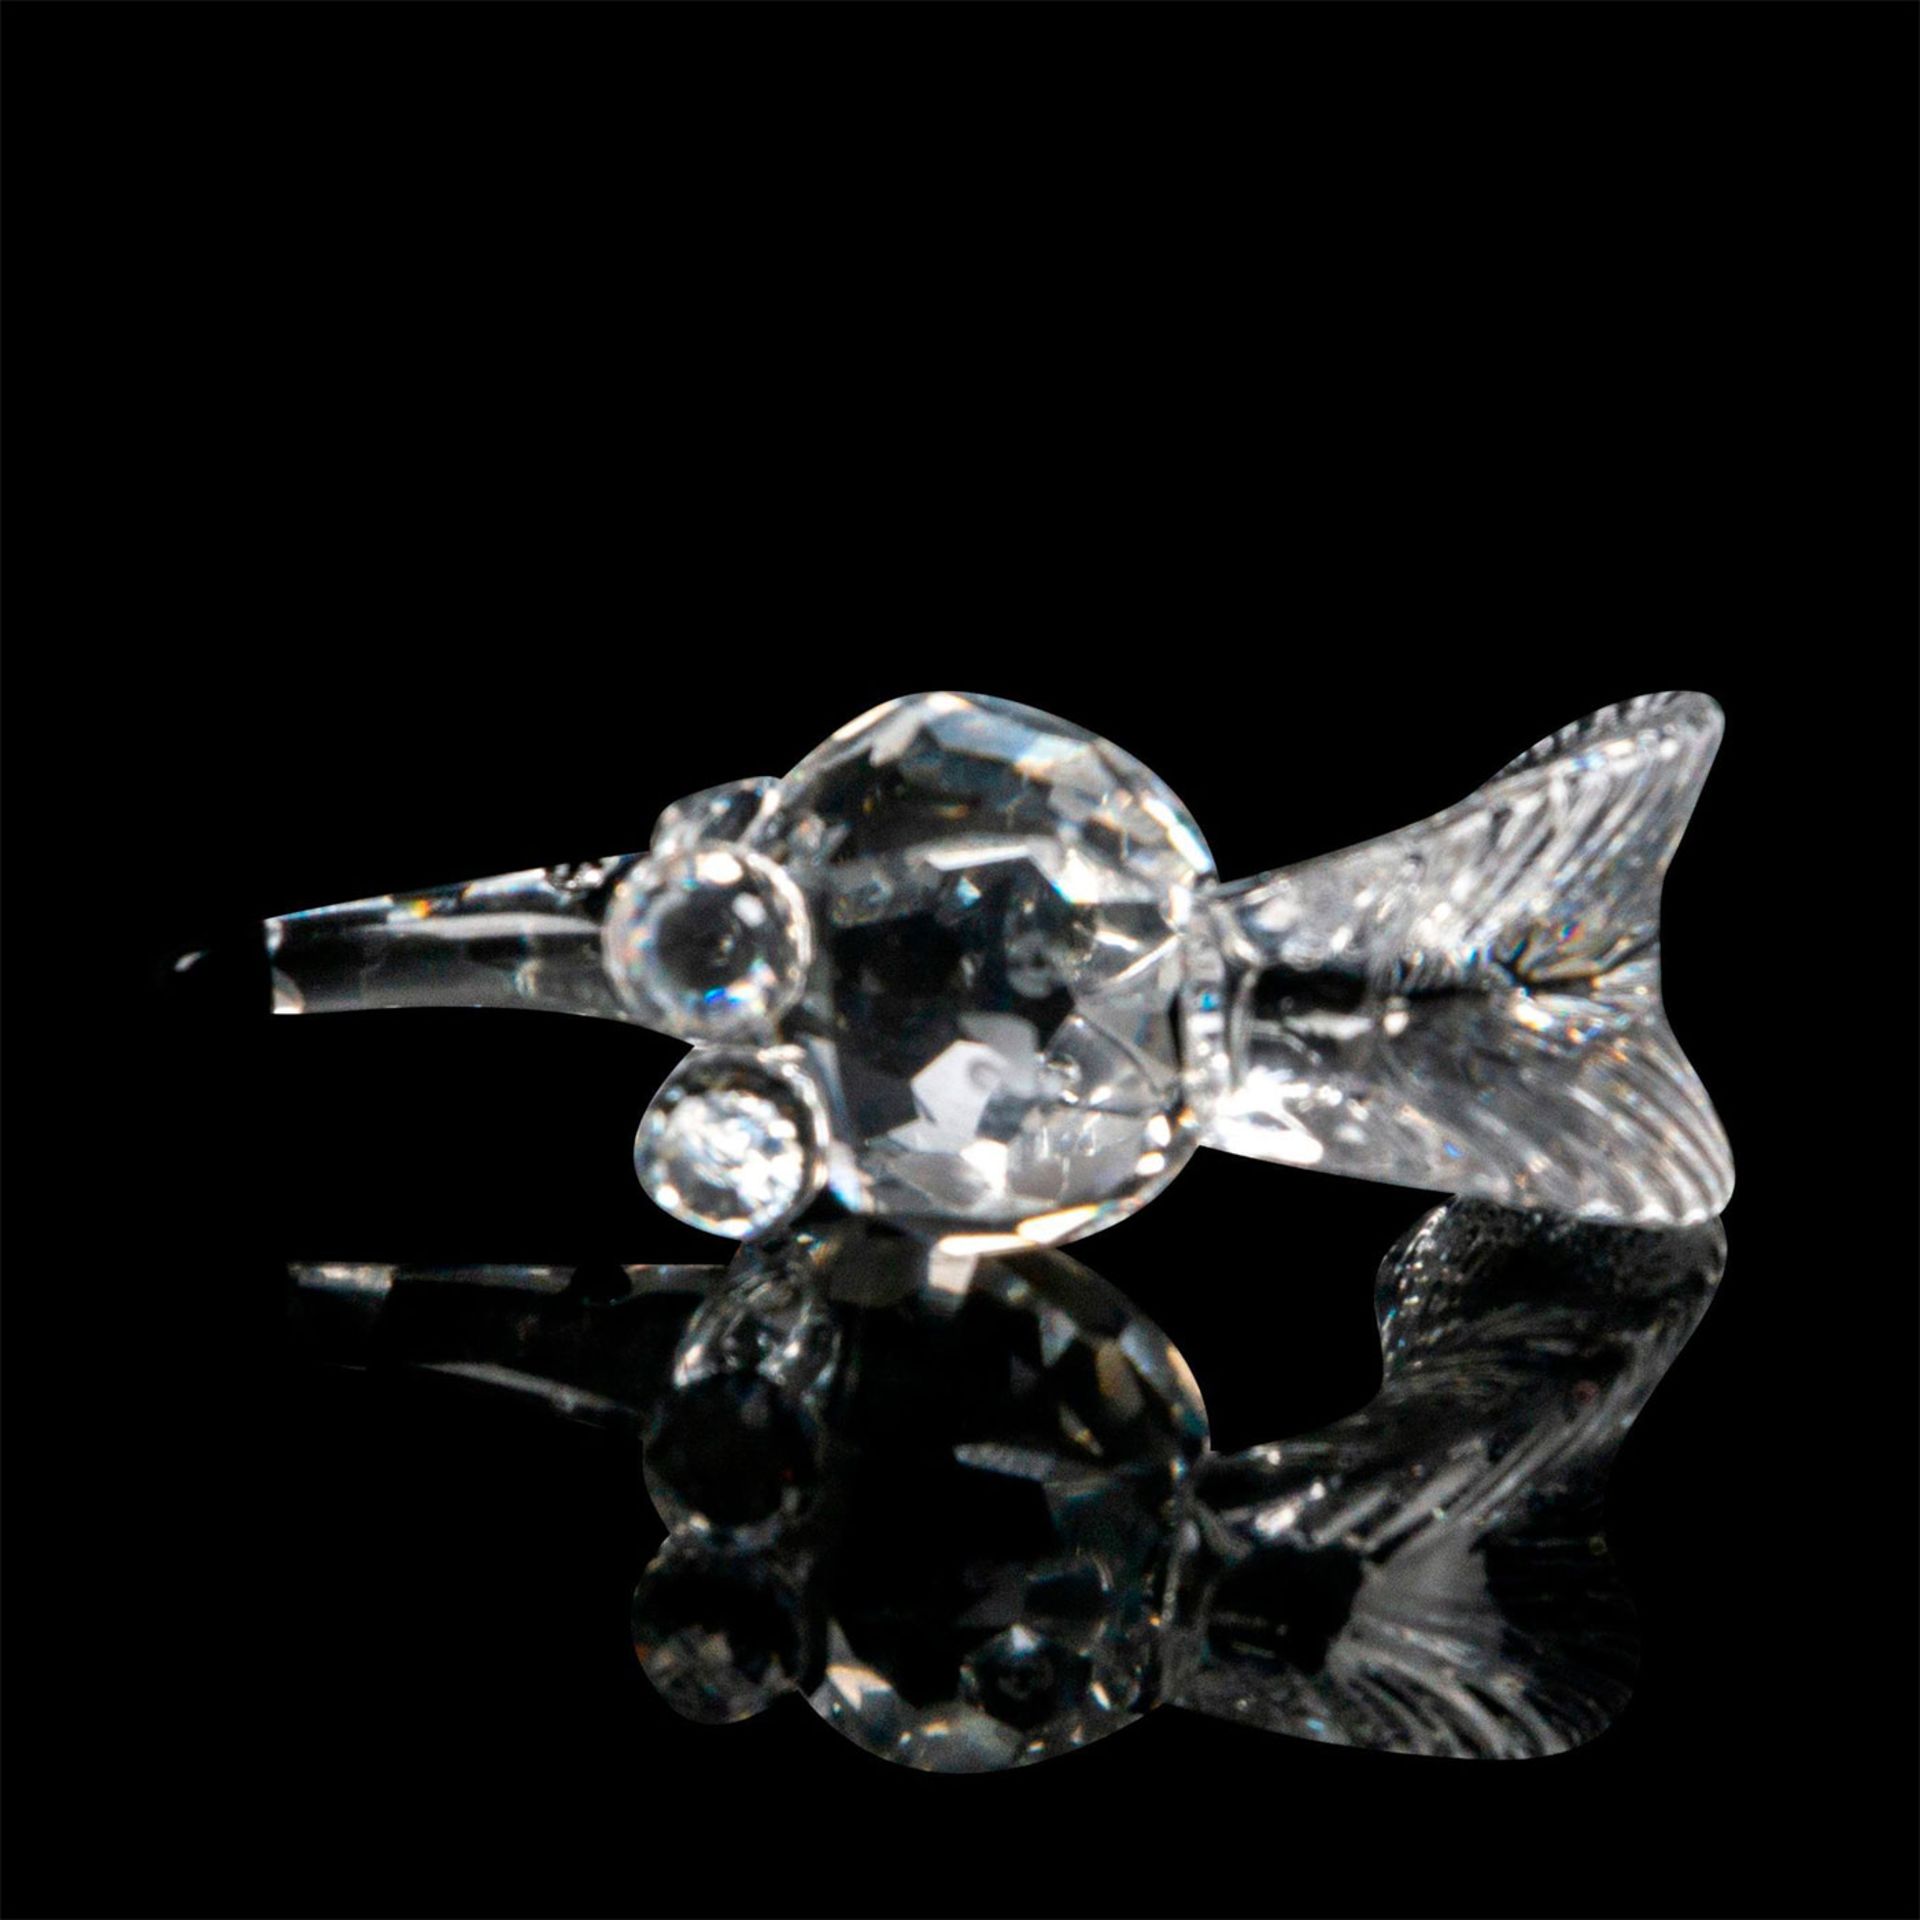 Swarovski Crystal Figurine, Anteater - Image 4 of 4